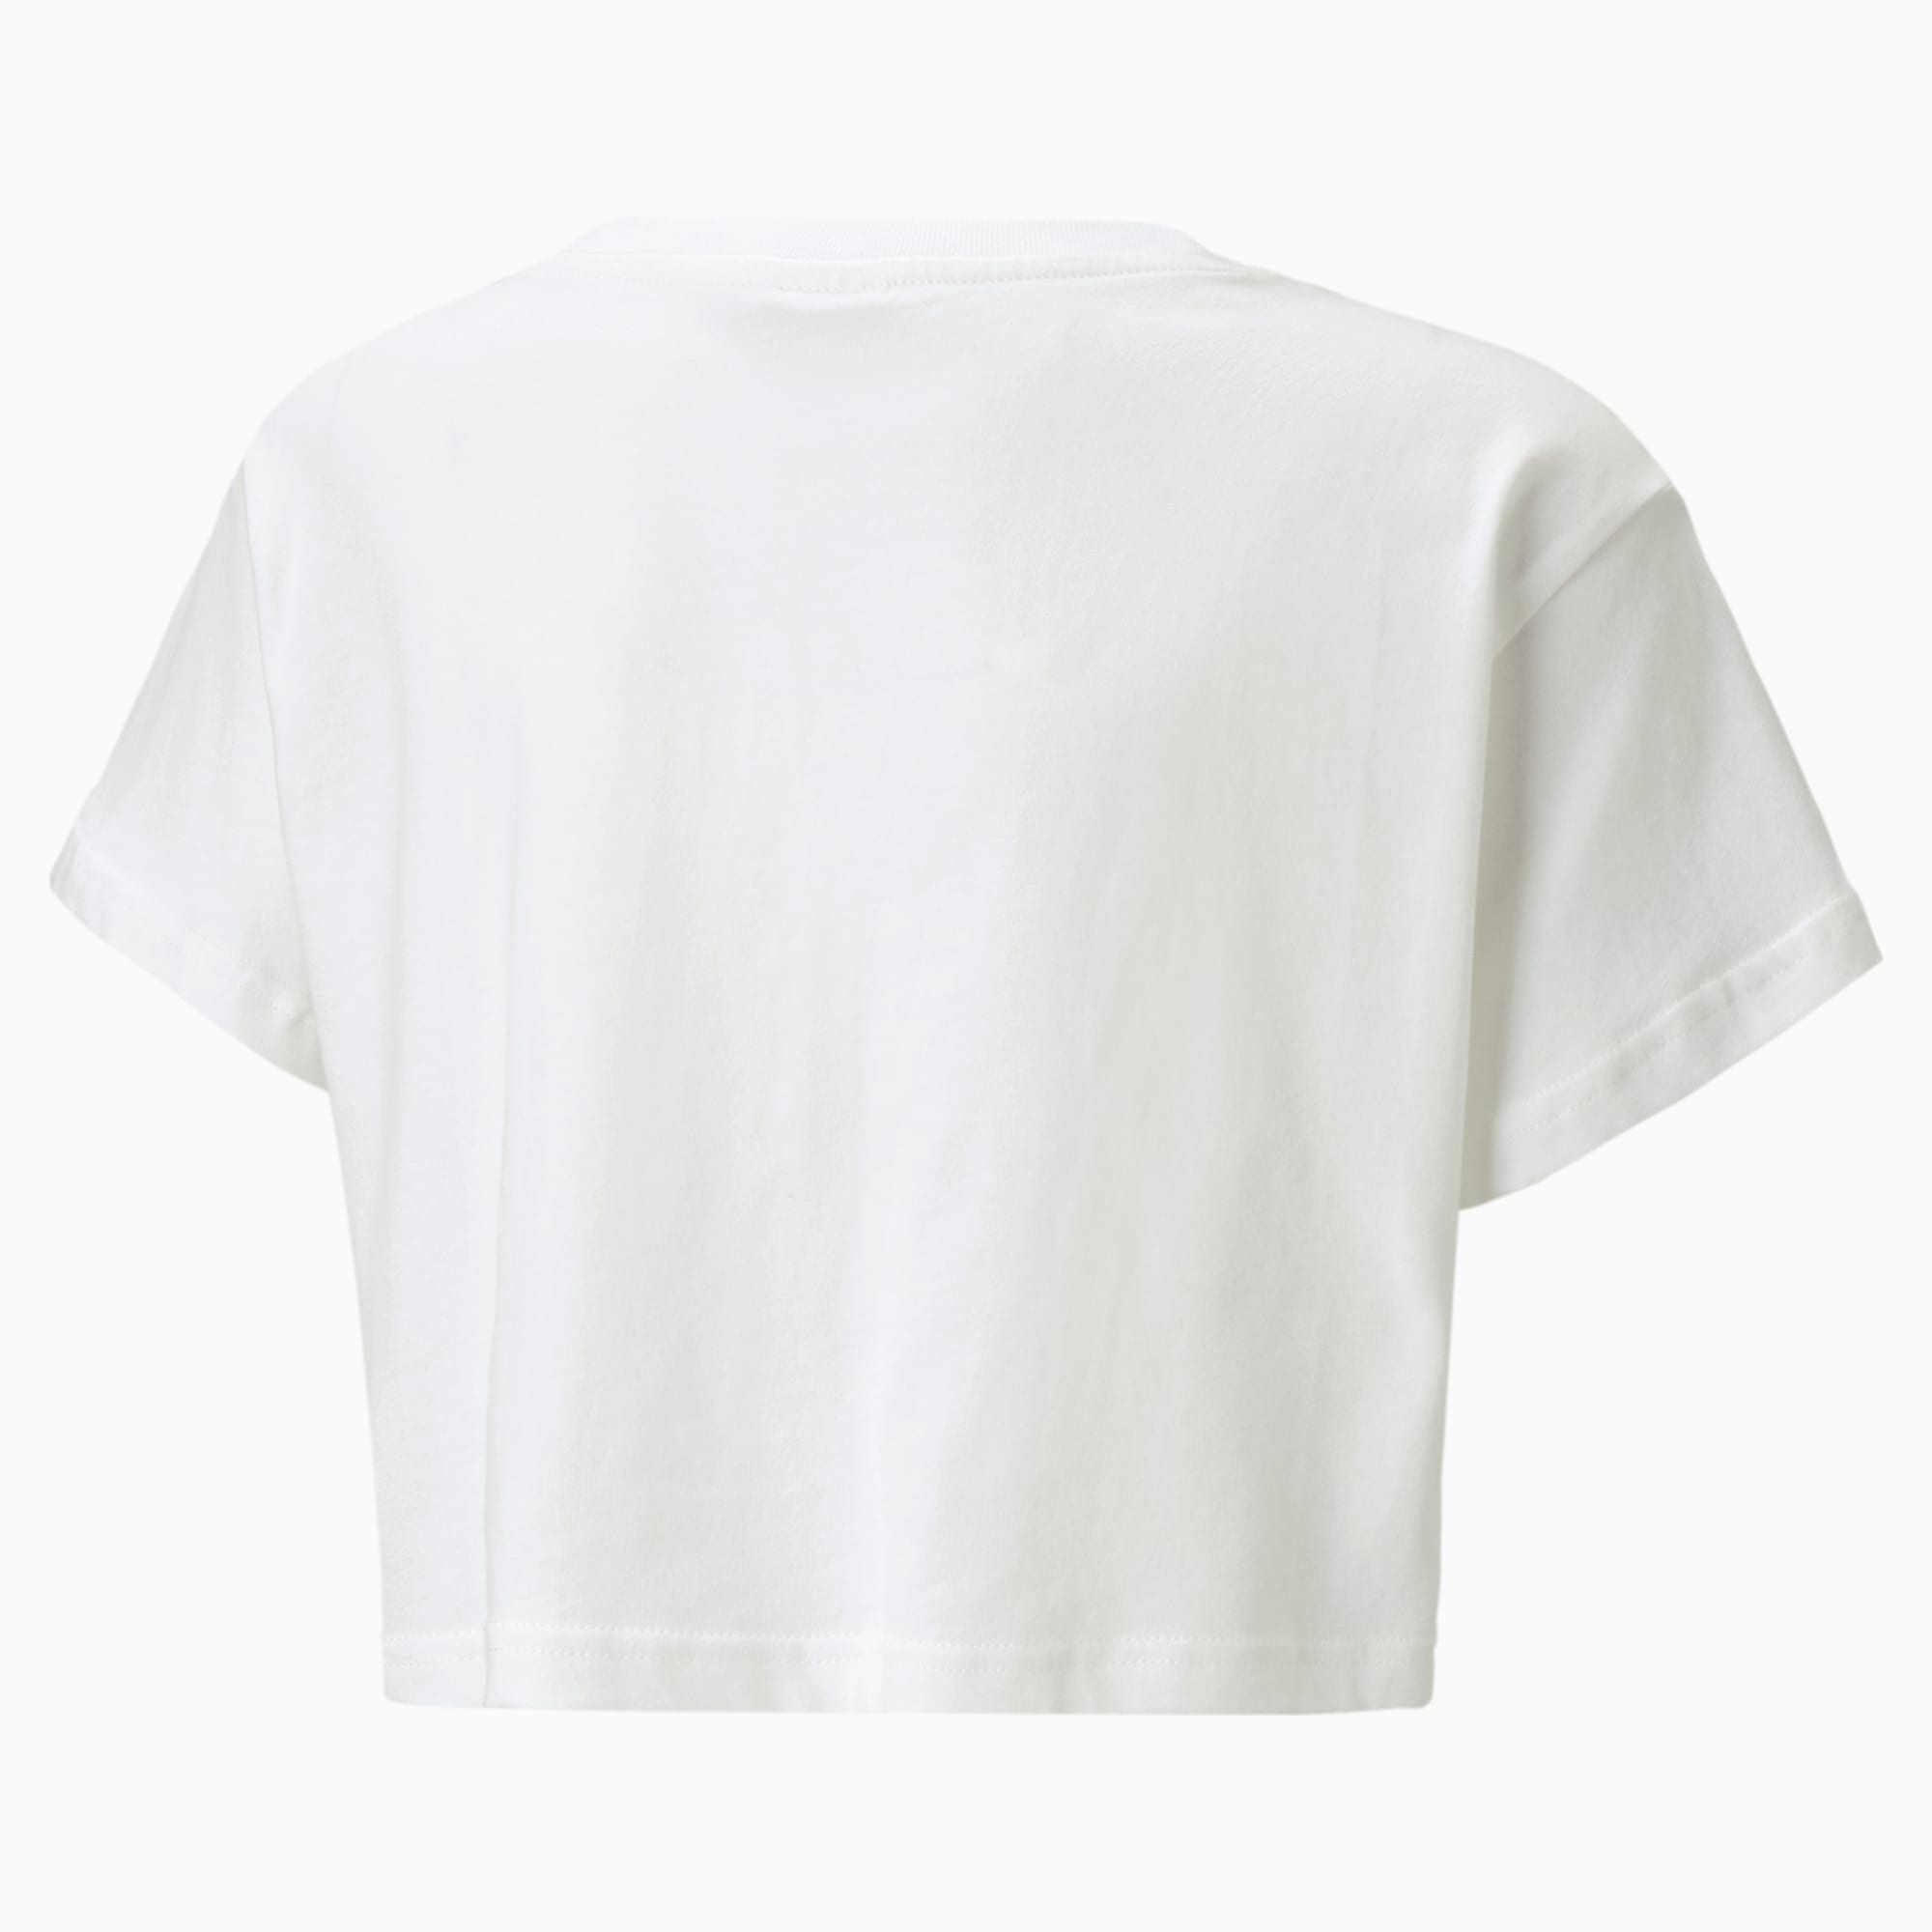 PUMA Classics T-Shirt Jugend Für Kinder, Weiß, Größe: 152, Kleidung